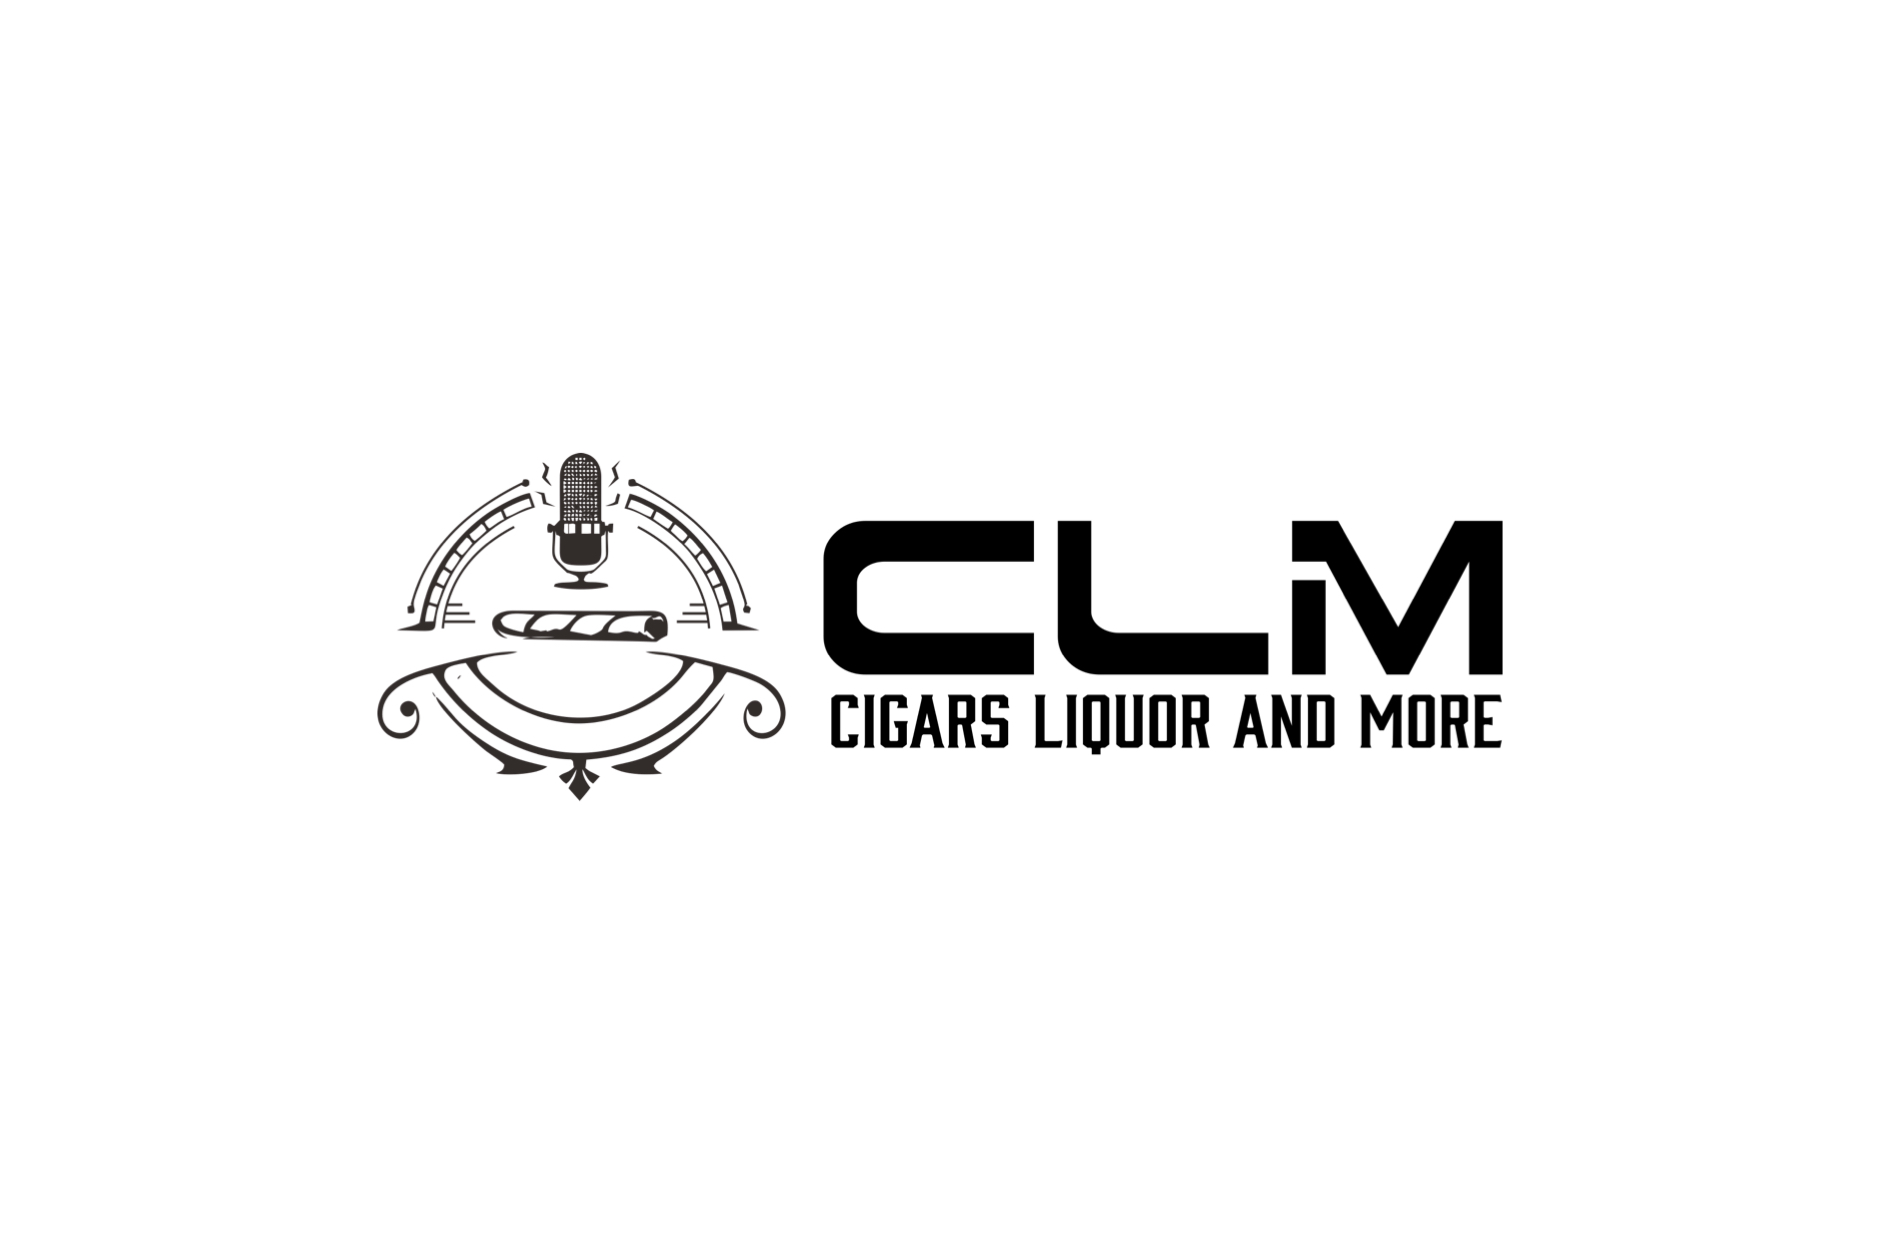 Listen: Charlie Minato on Cigars Liquor and More | halfwheel